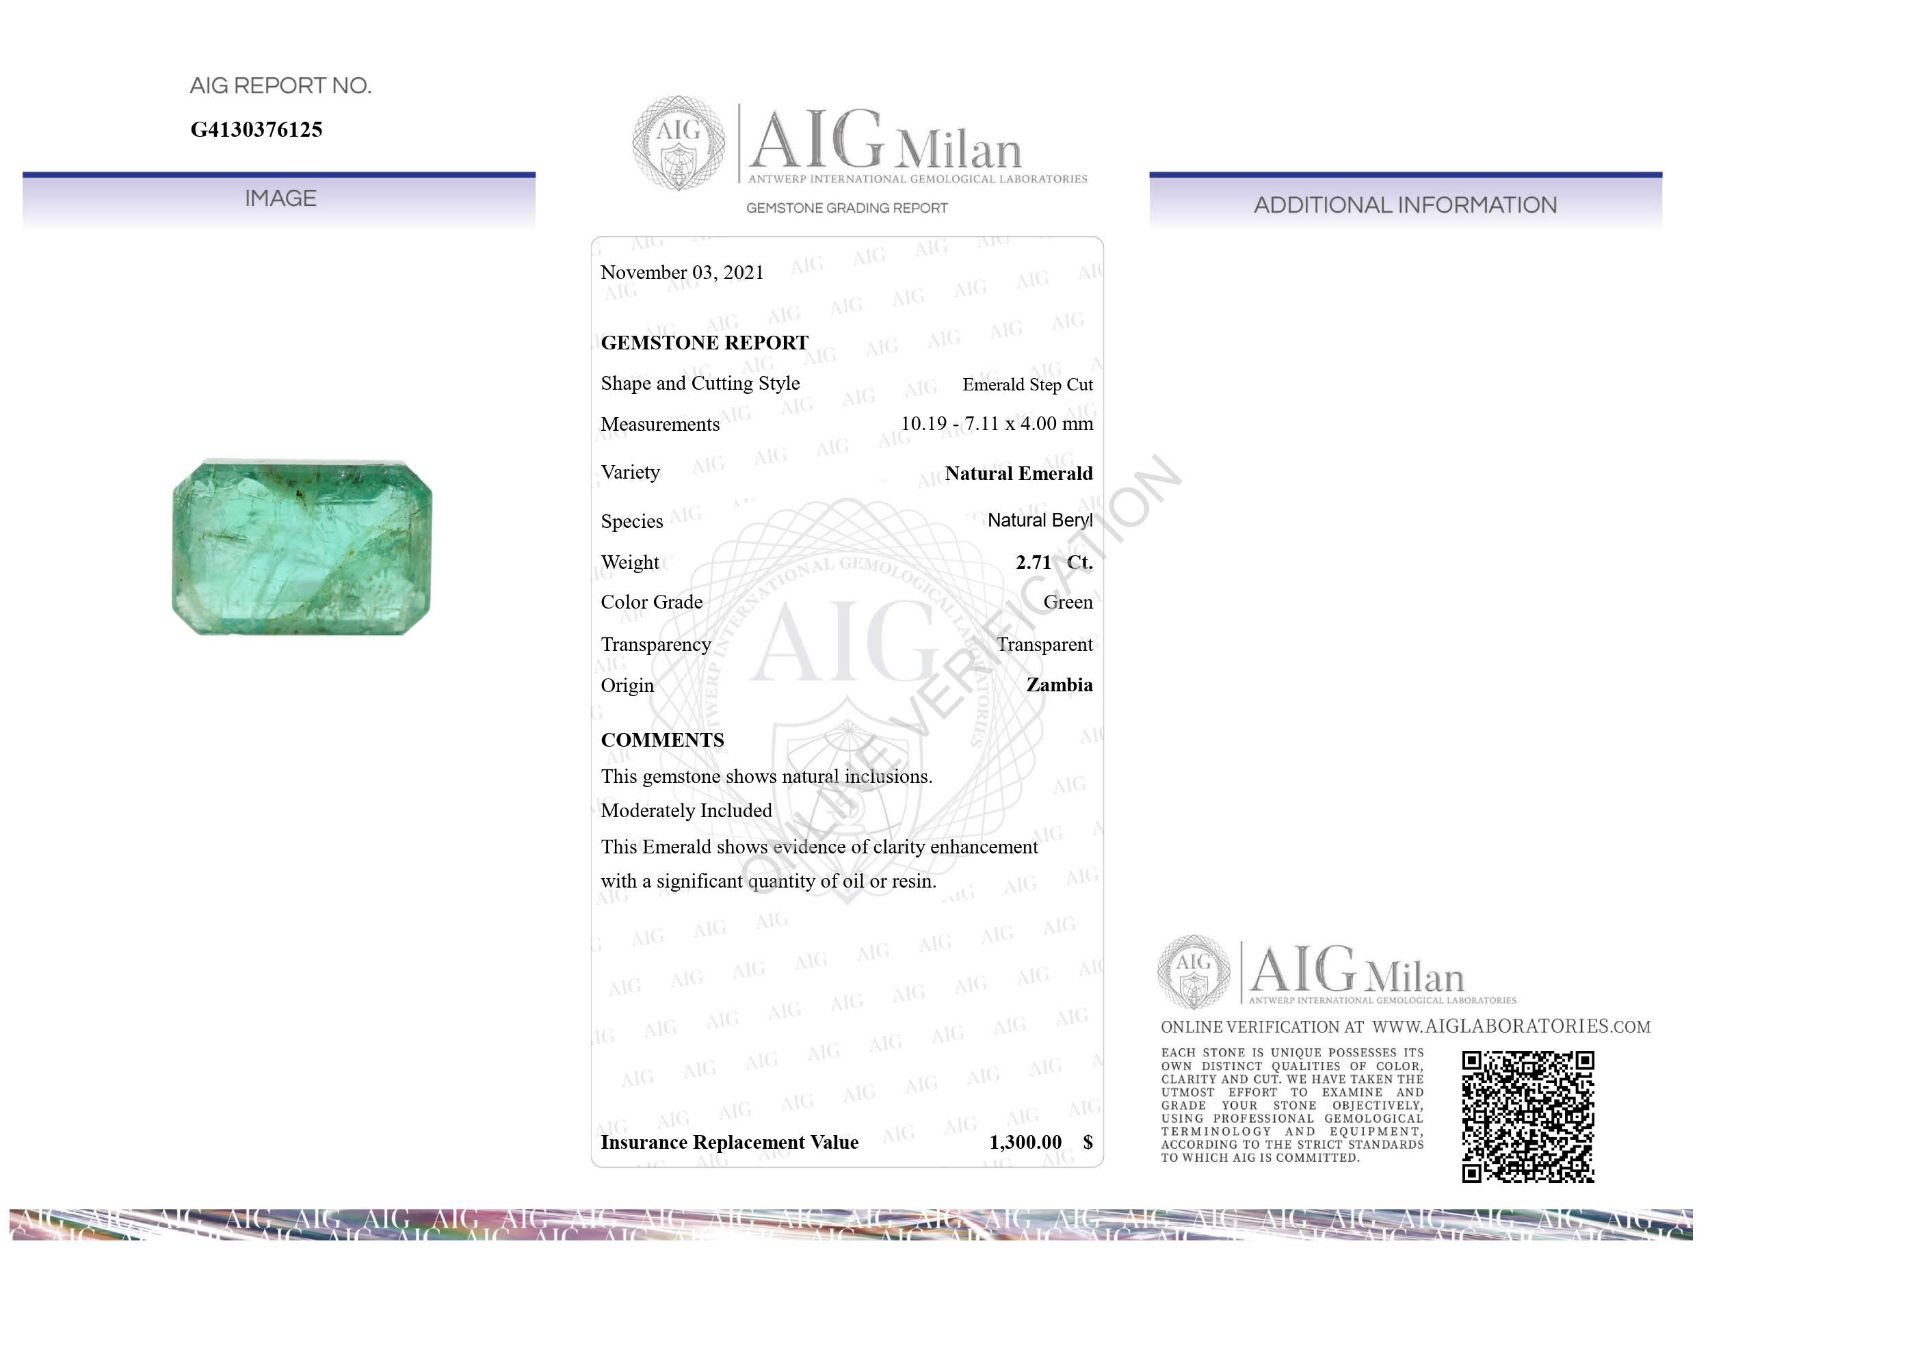 Loser Smaragd - Smaragd-Schliff, grün, 2,71ct., Maße 10.19-7.11x4.00mm, Wertgutachten AIG Mailand,  - Bild 9 aus 9